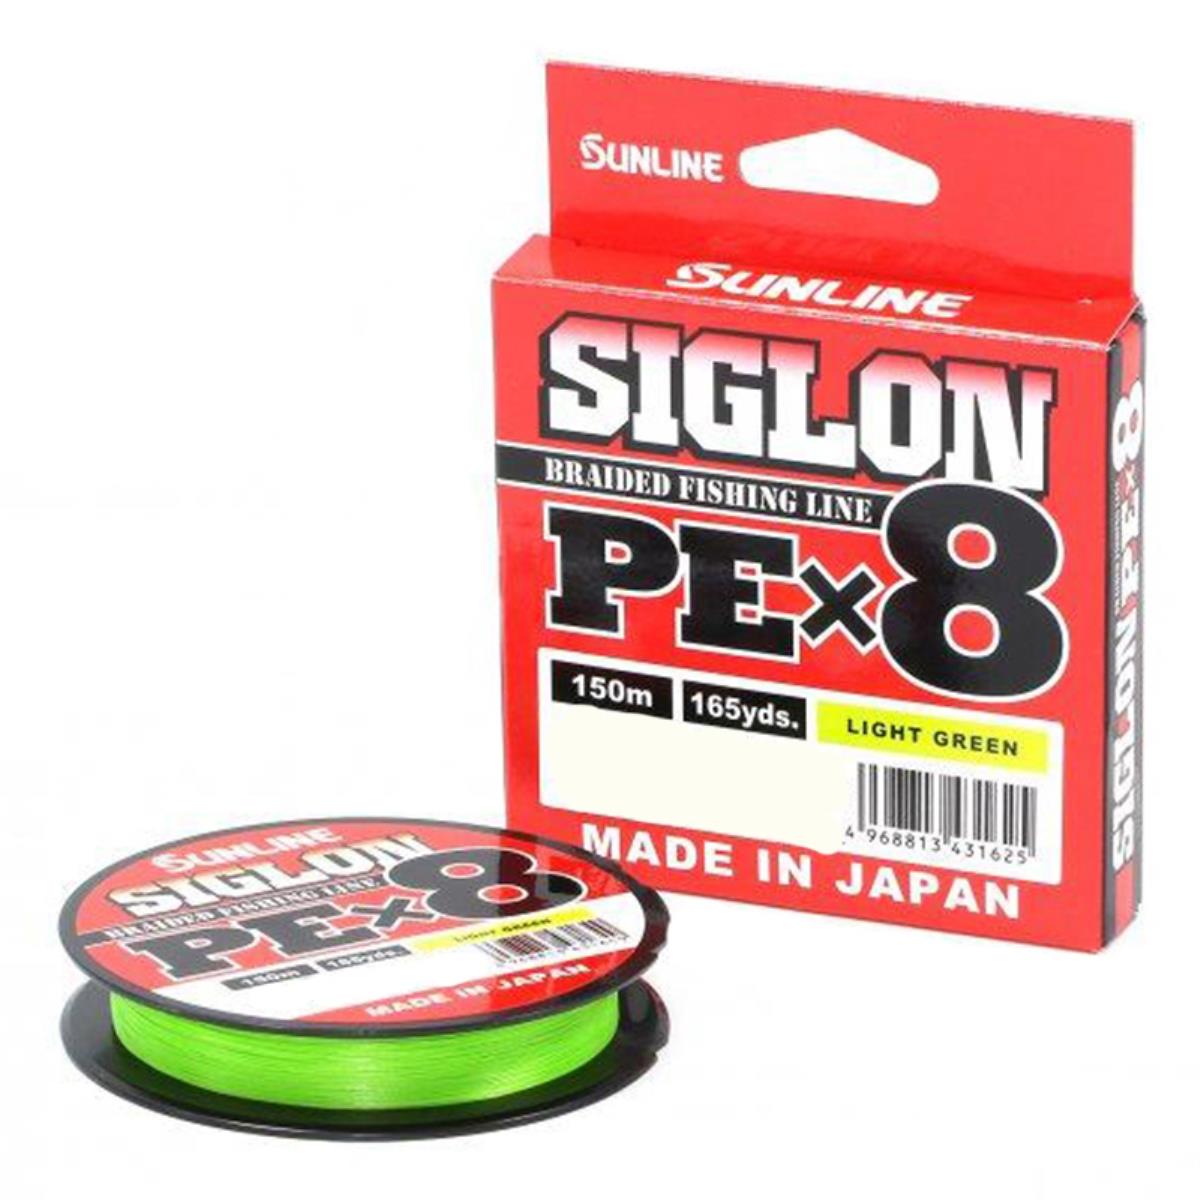 Шнур SIGLON PE×8 150M (Light Green) Sunline шнур для вязания